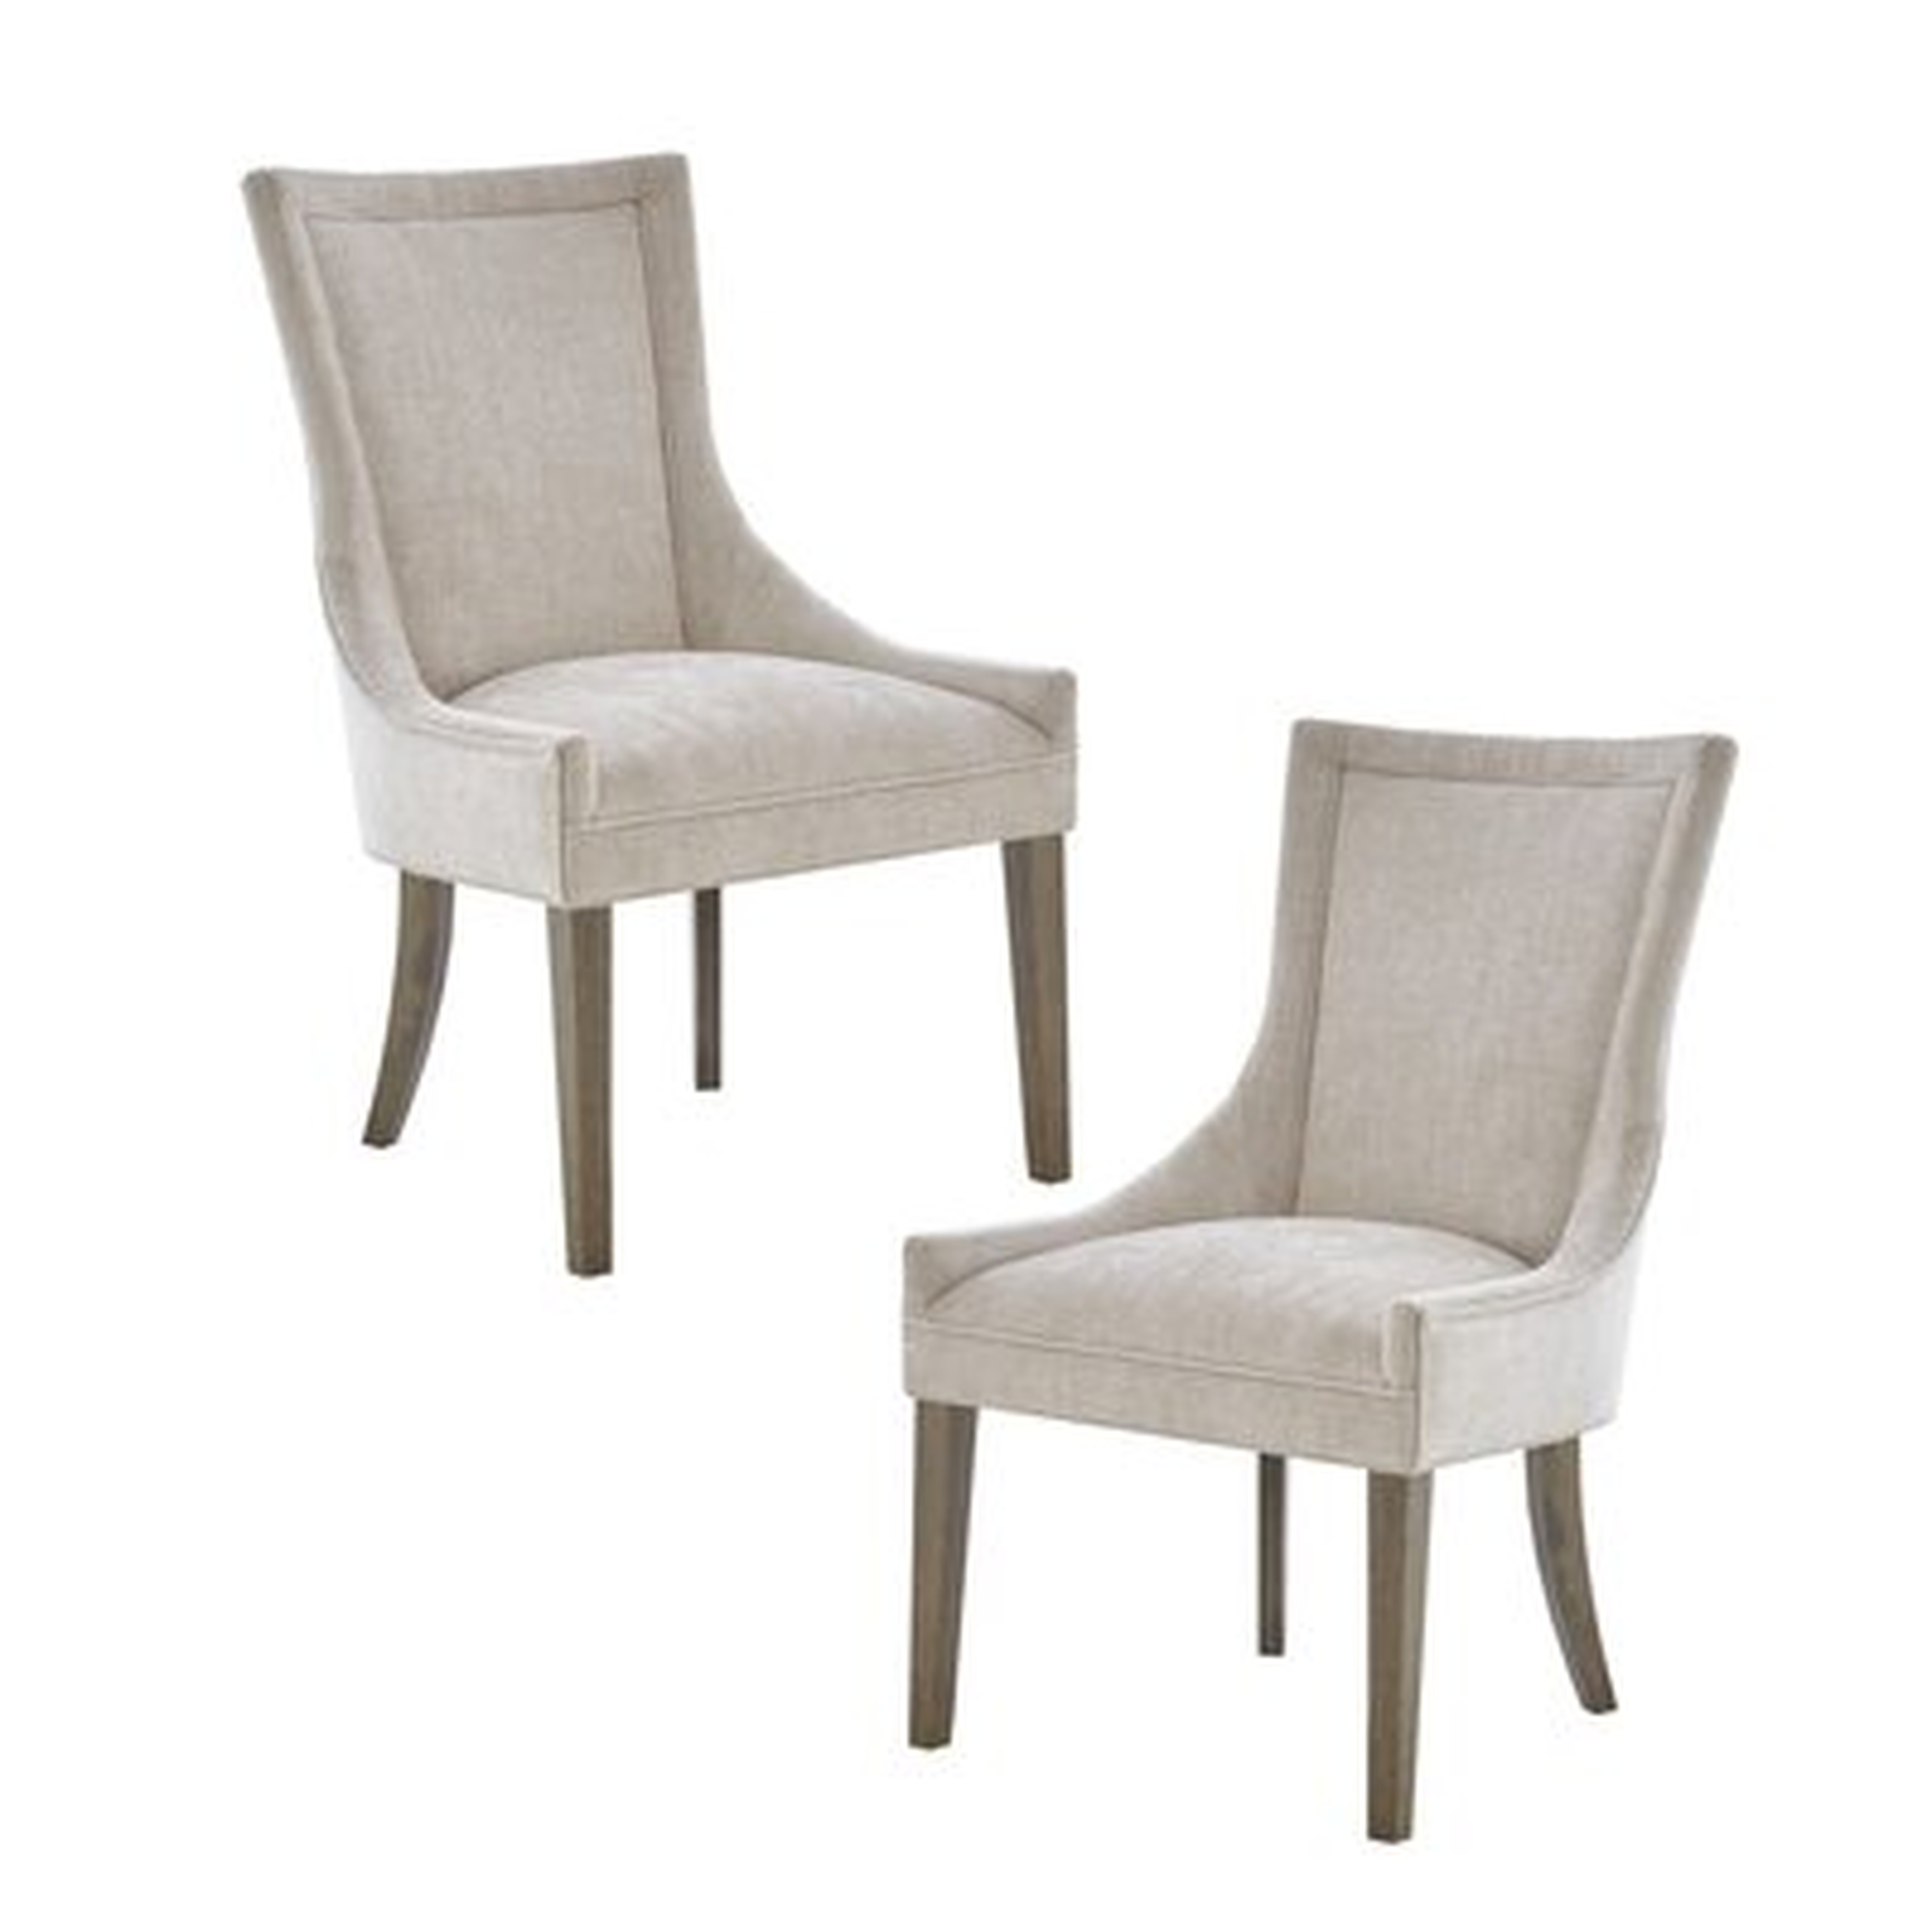 Ultra Upholstered Dining Chair, Cream, Set of 2 - Wayfair